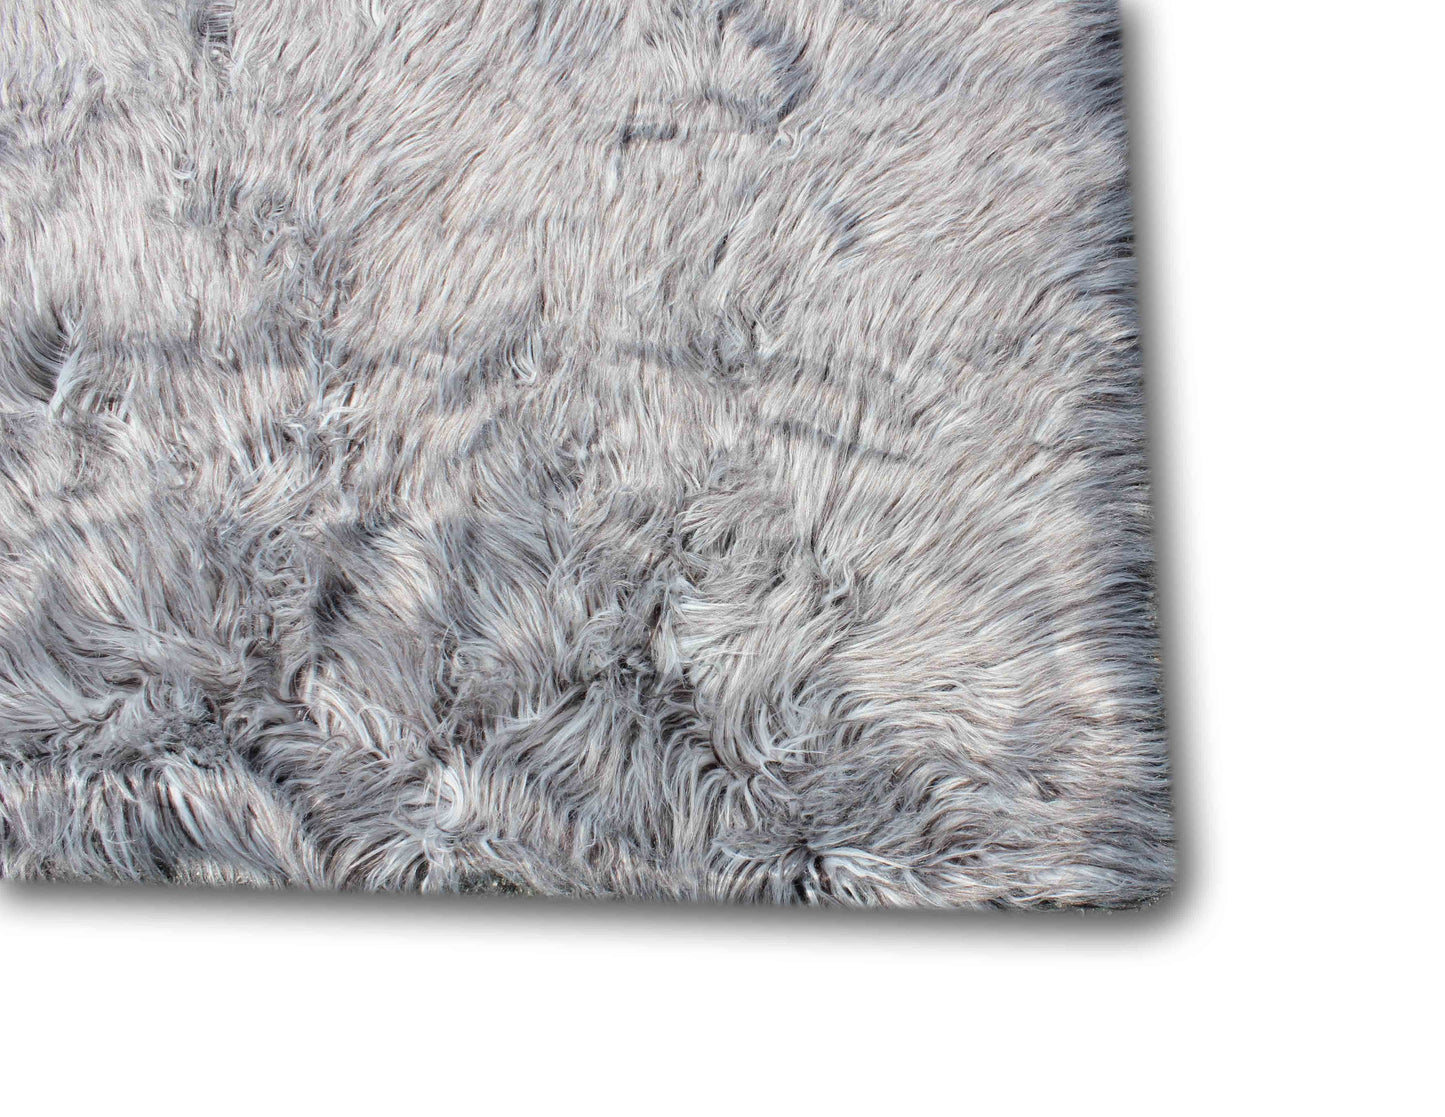 High Quality Soft Cozy Fuzzy Faux Fox Fur Area Rug / Carpet